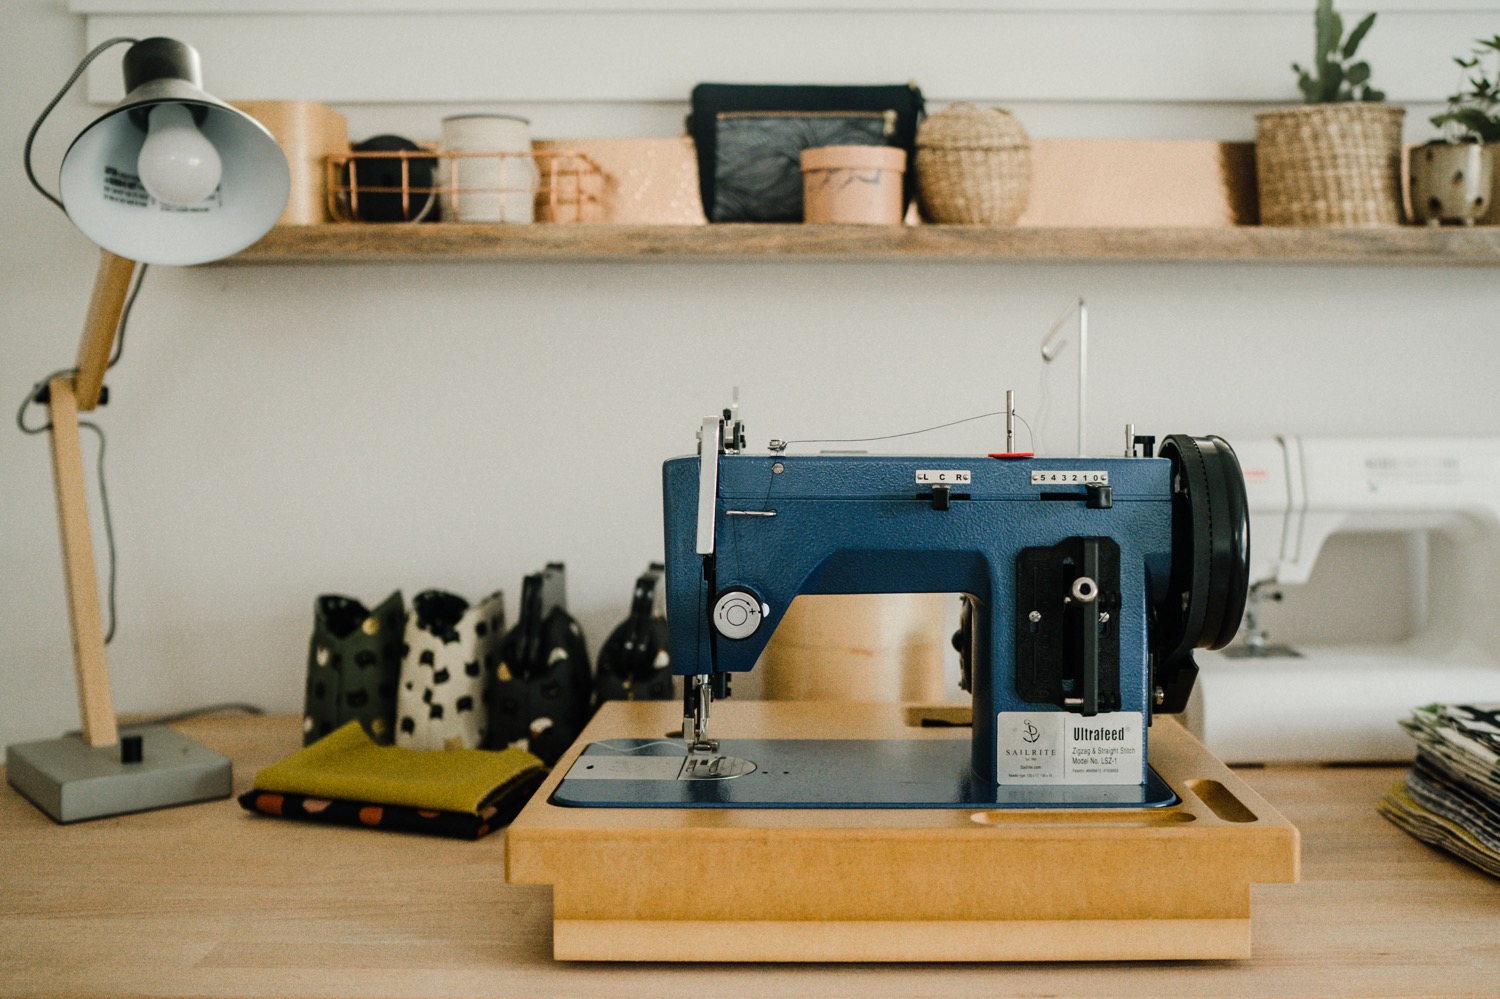 Blue sewing machine on desk